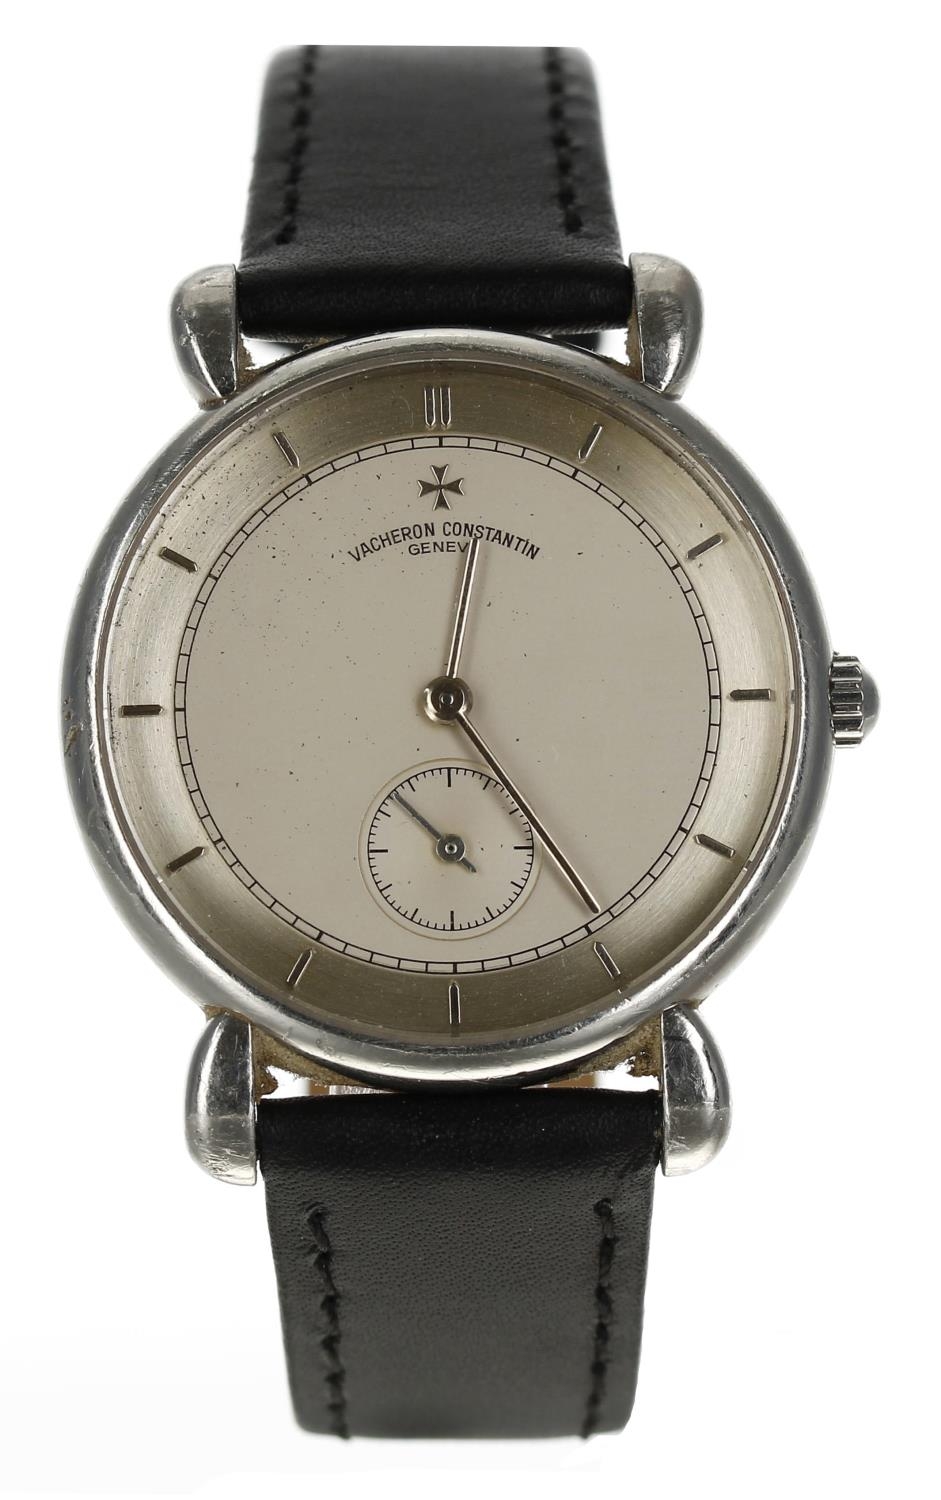 Fine Vacheron Constantin, Geneve Historique platinum limited edition gentleman's wristwatch, - Image 2 of 10